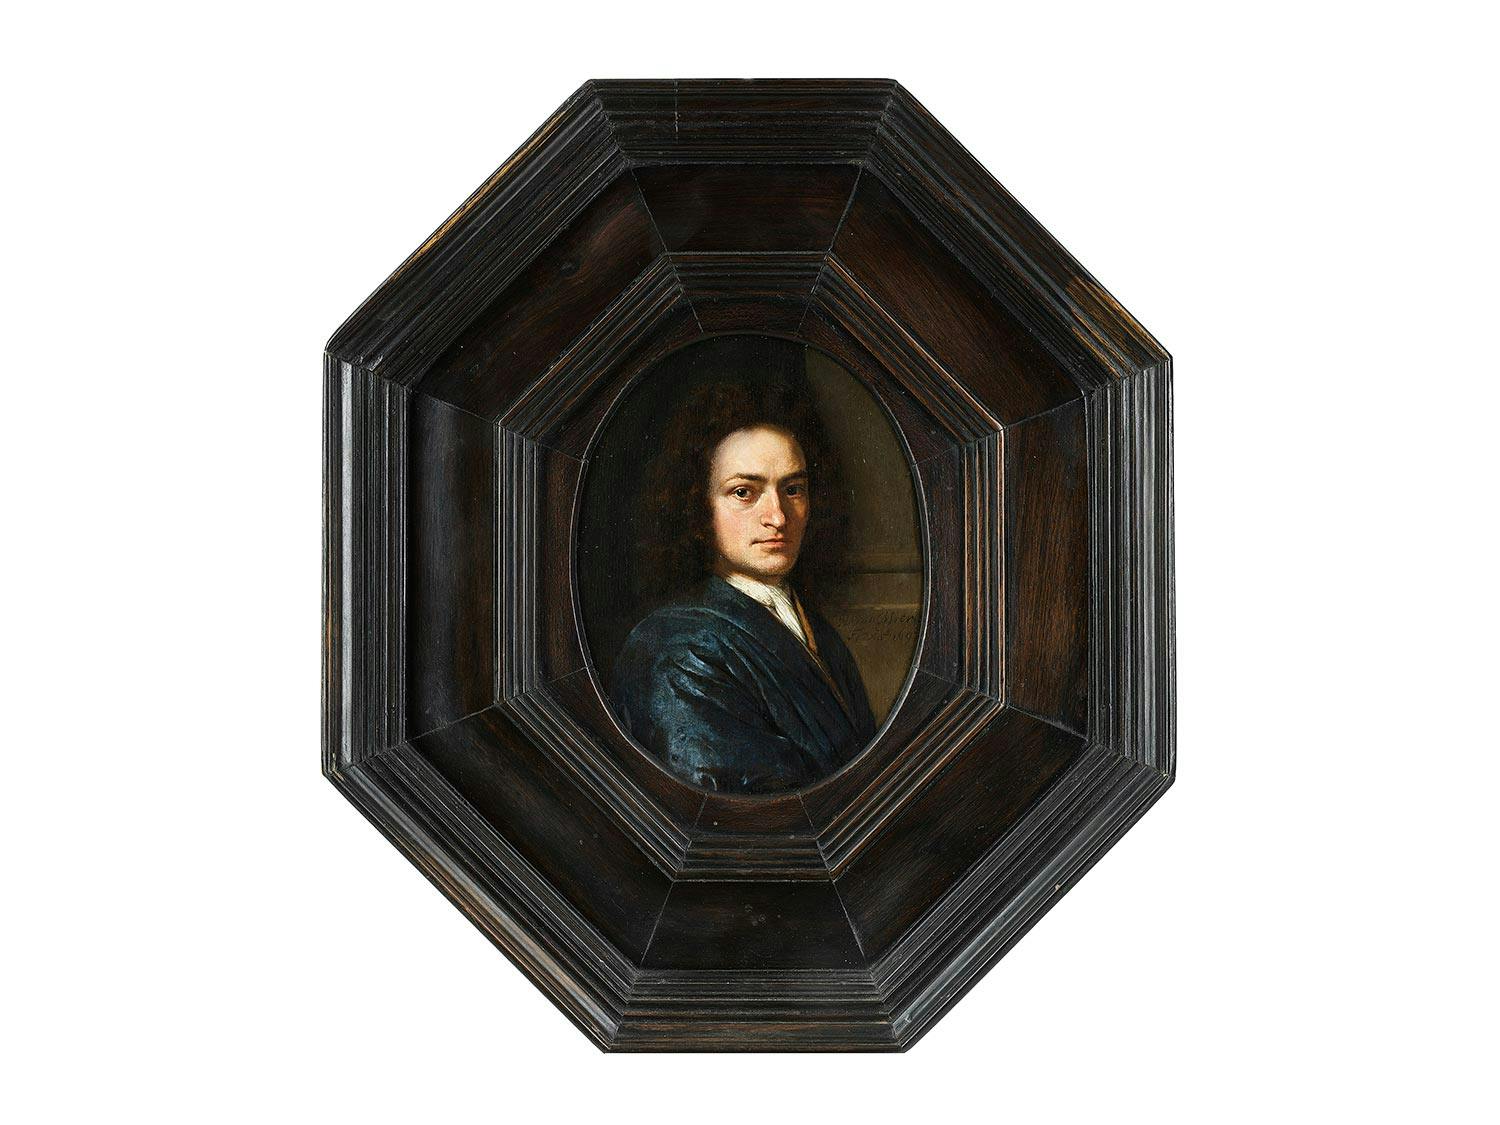 Willem van Mieris, 1662 Leiden – 1747 ebenda